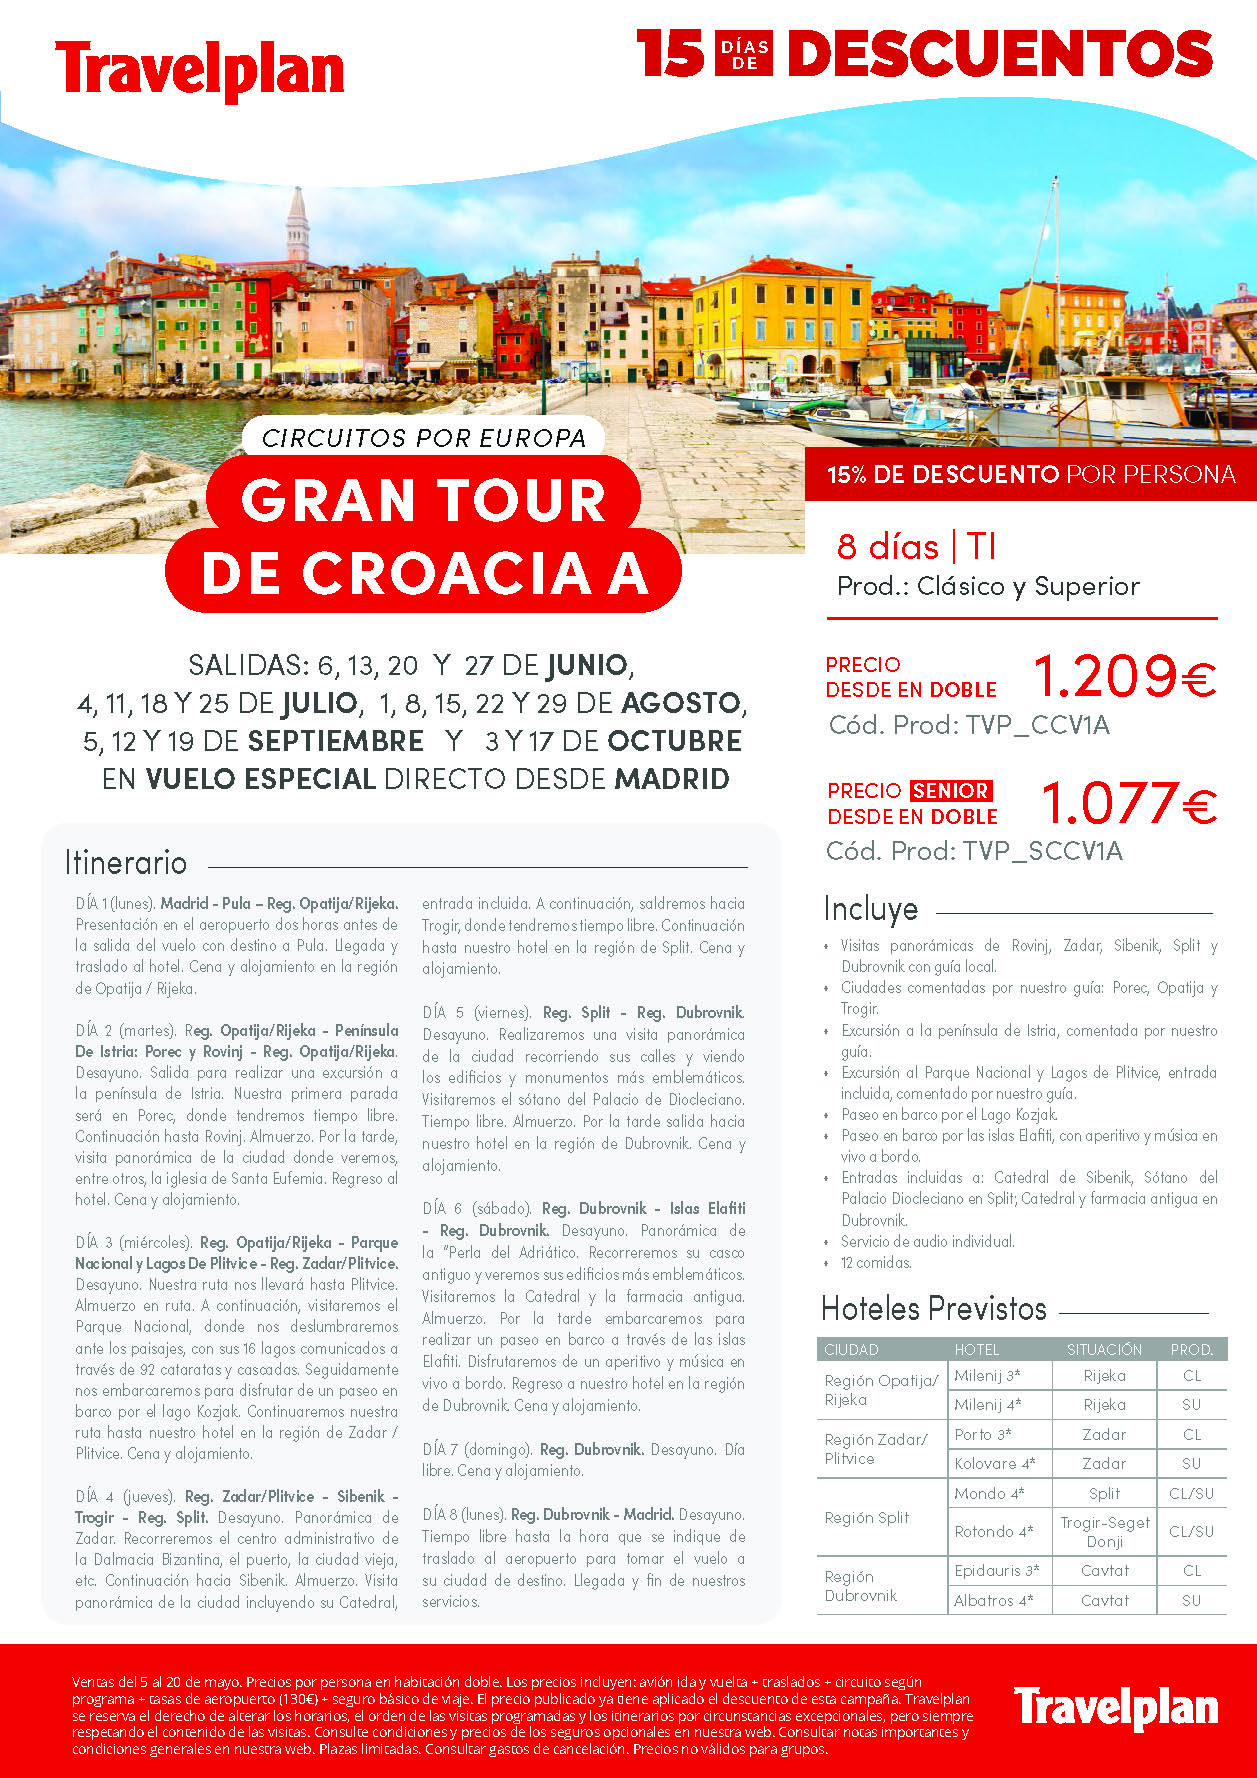 Oferta Travelplan Mayo 2022 Gran Tour de Croacia A Todo Incluido Senior 8 dias vuelo especial directo desde Madrid salidas Junio a Octubre de 2022